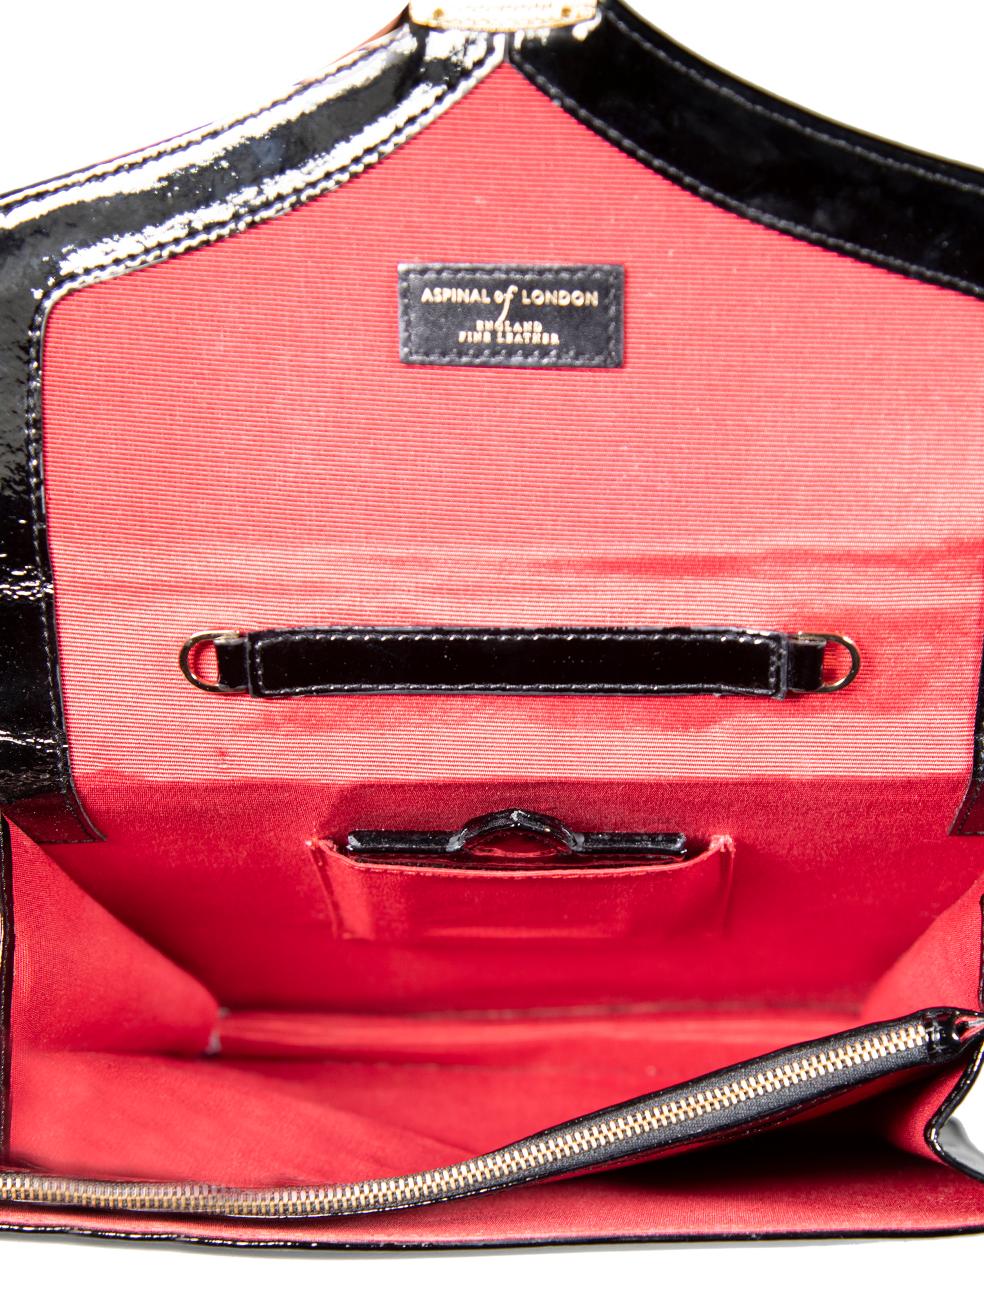 Aspinal of London Black Patent Mayfair Top-Handle Bag For Sale 2